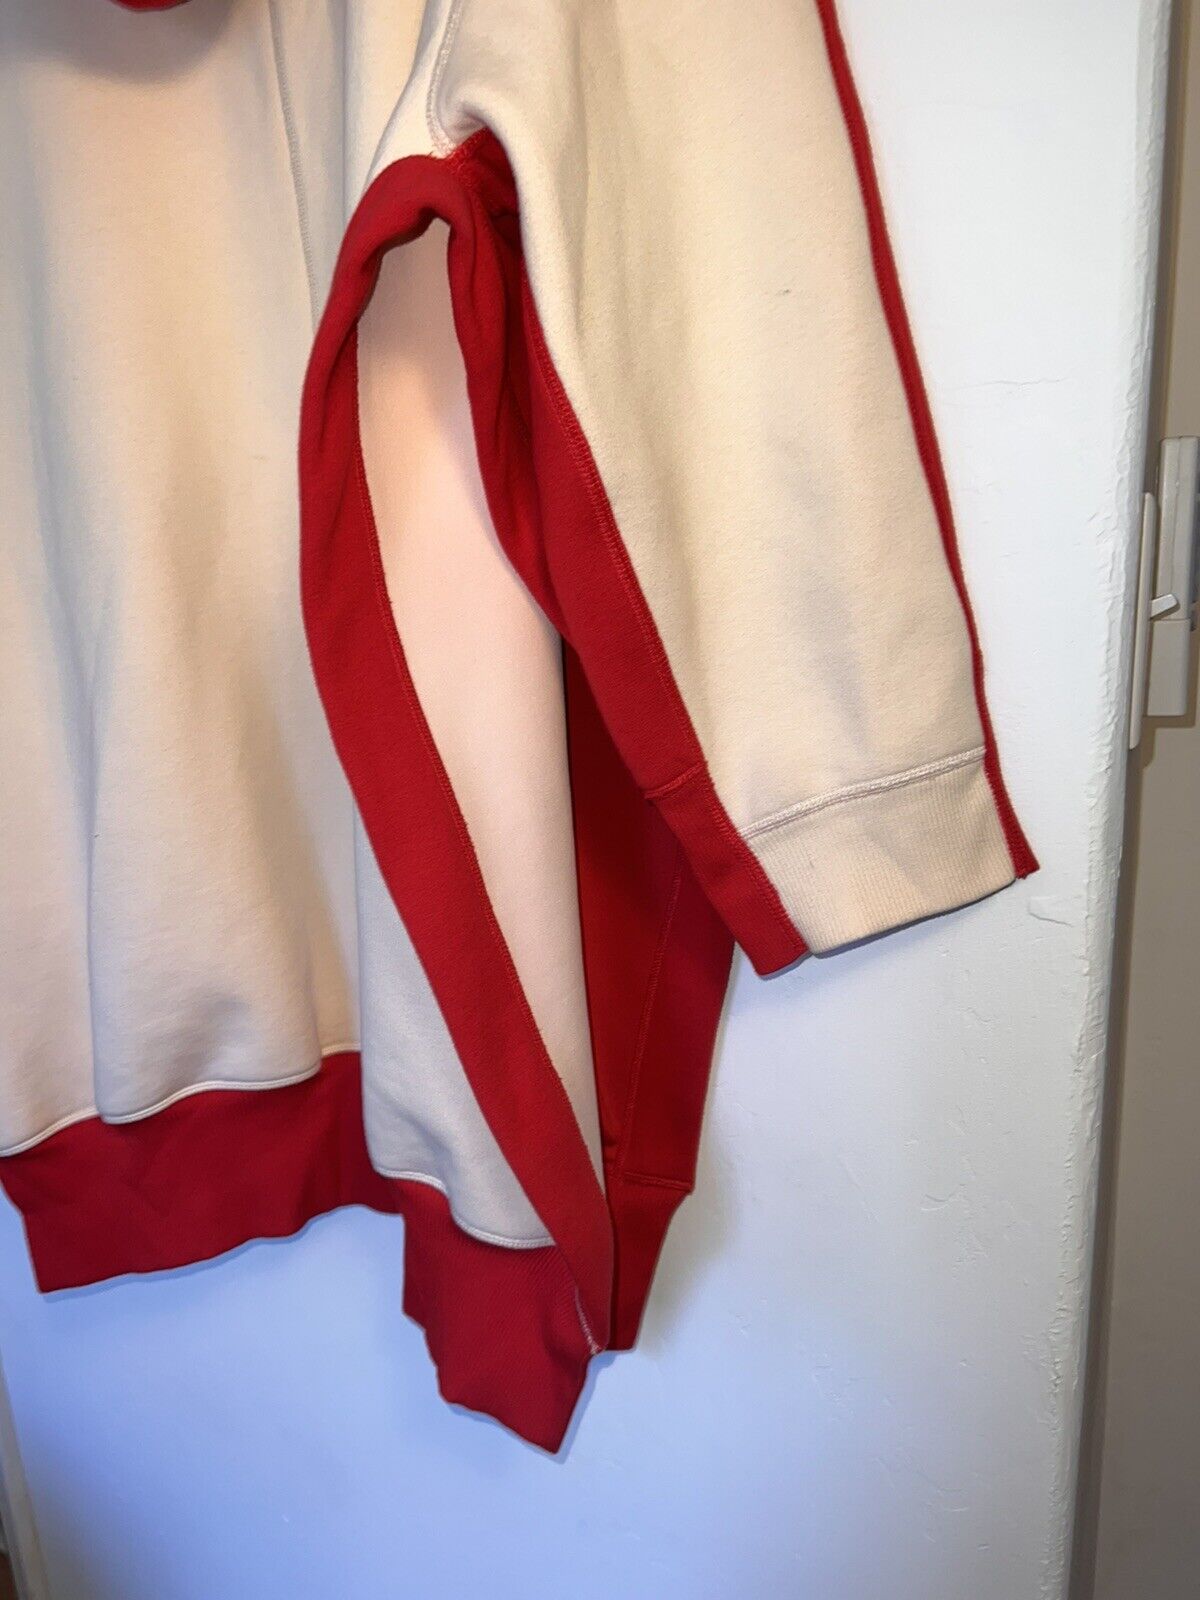 Celine Oversized Cotton Blend Red/Ivory Sweathshirt Hoodie XS Phoebe Philo  F 18 | eBay